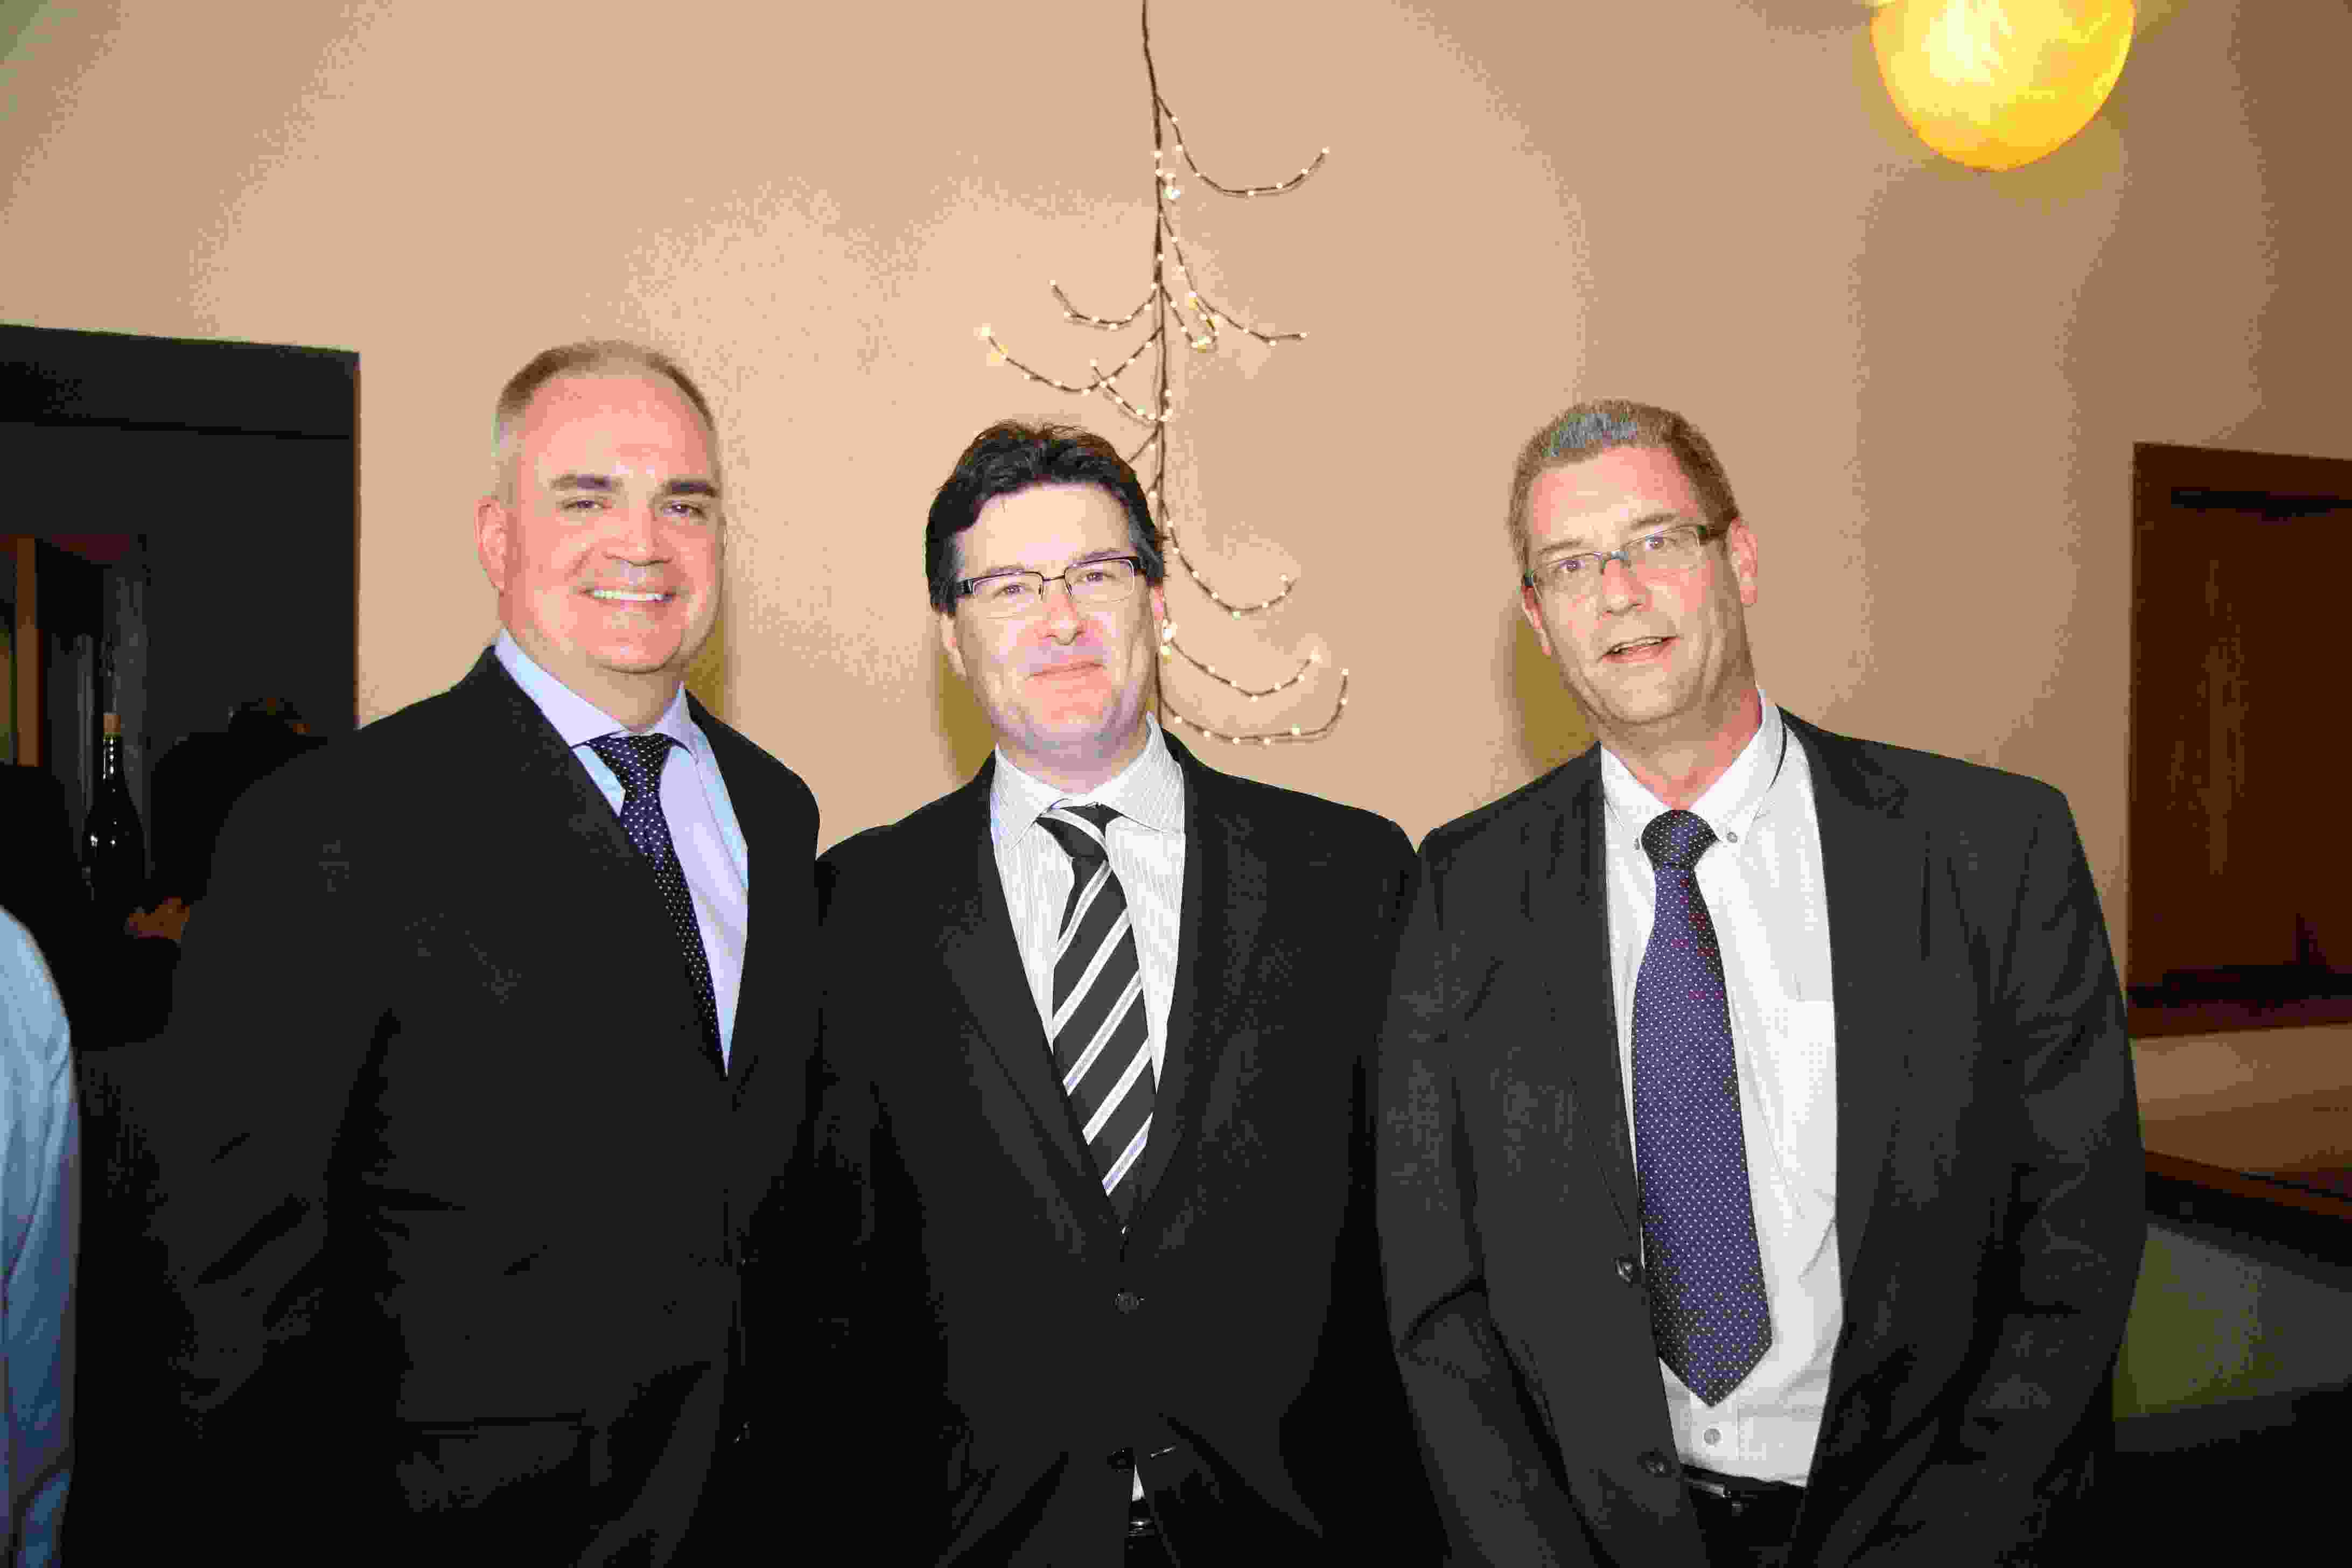 Drs. Brian Brochu, Darren Brennan & Stephan Wicky